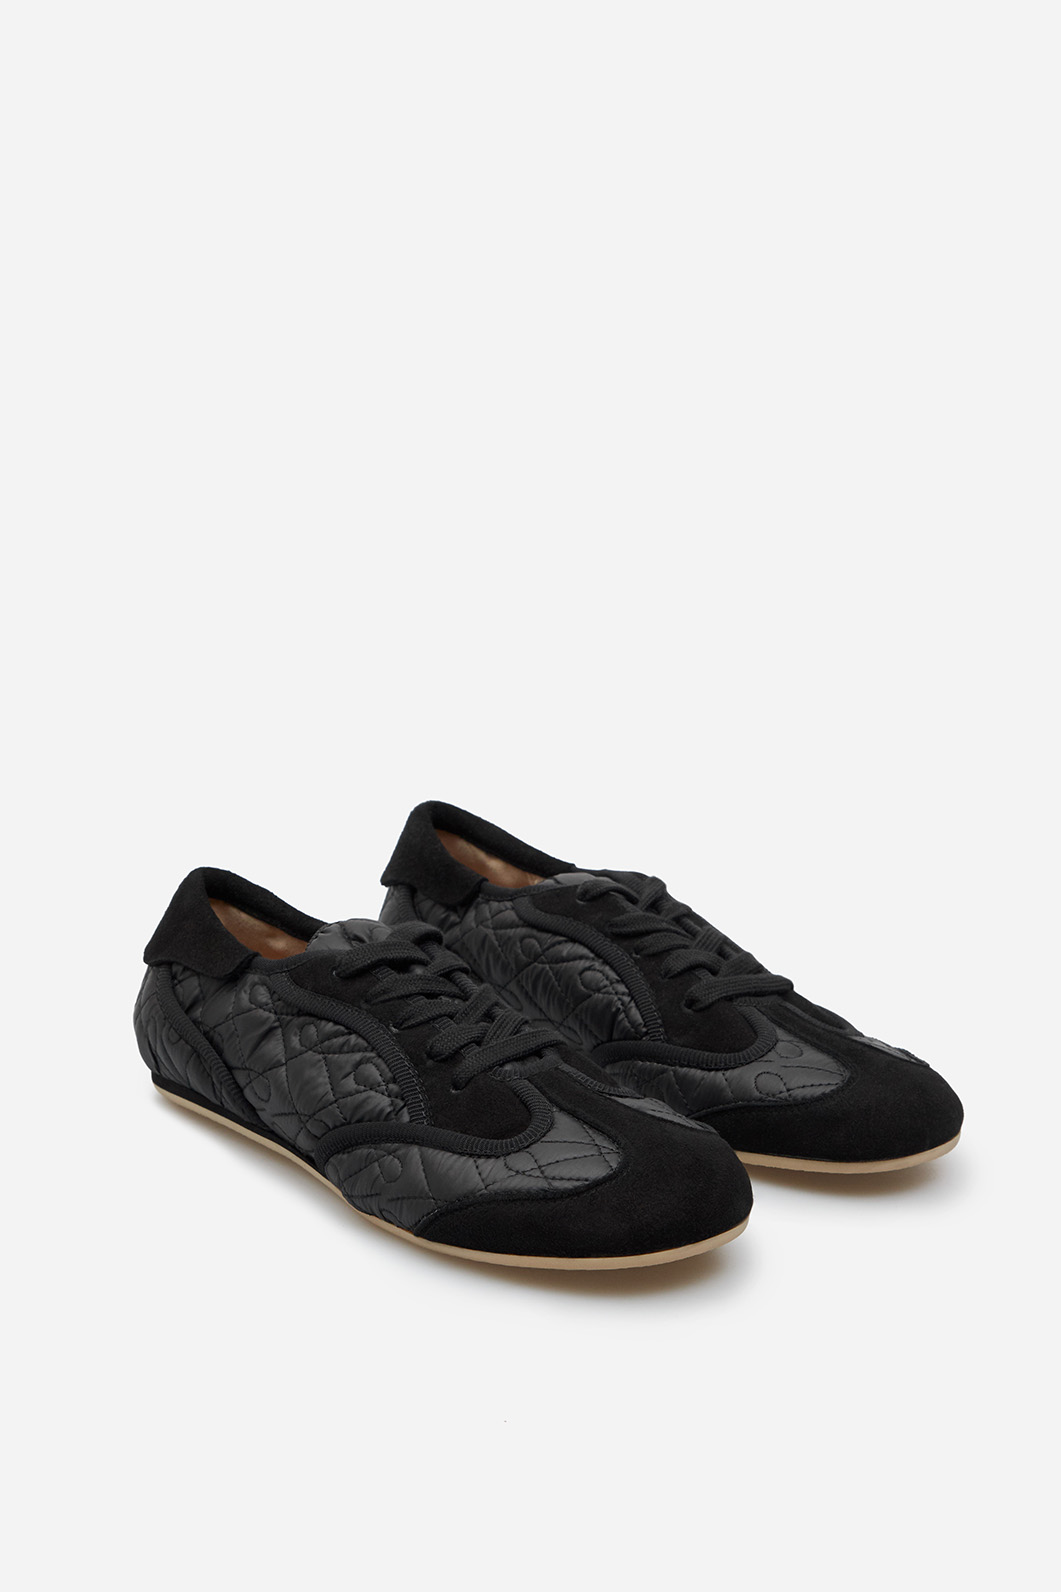 Bowley black textile sneakers